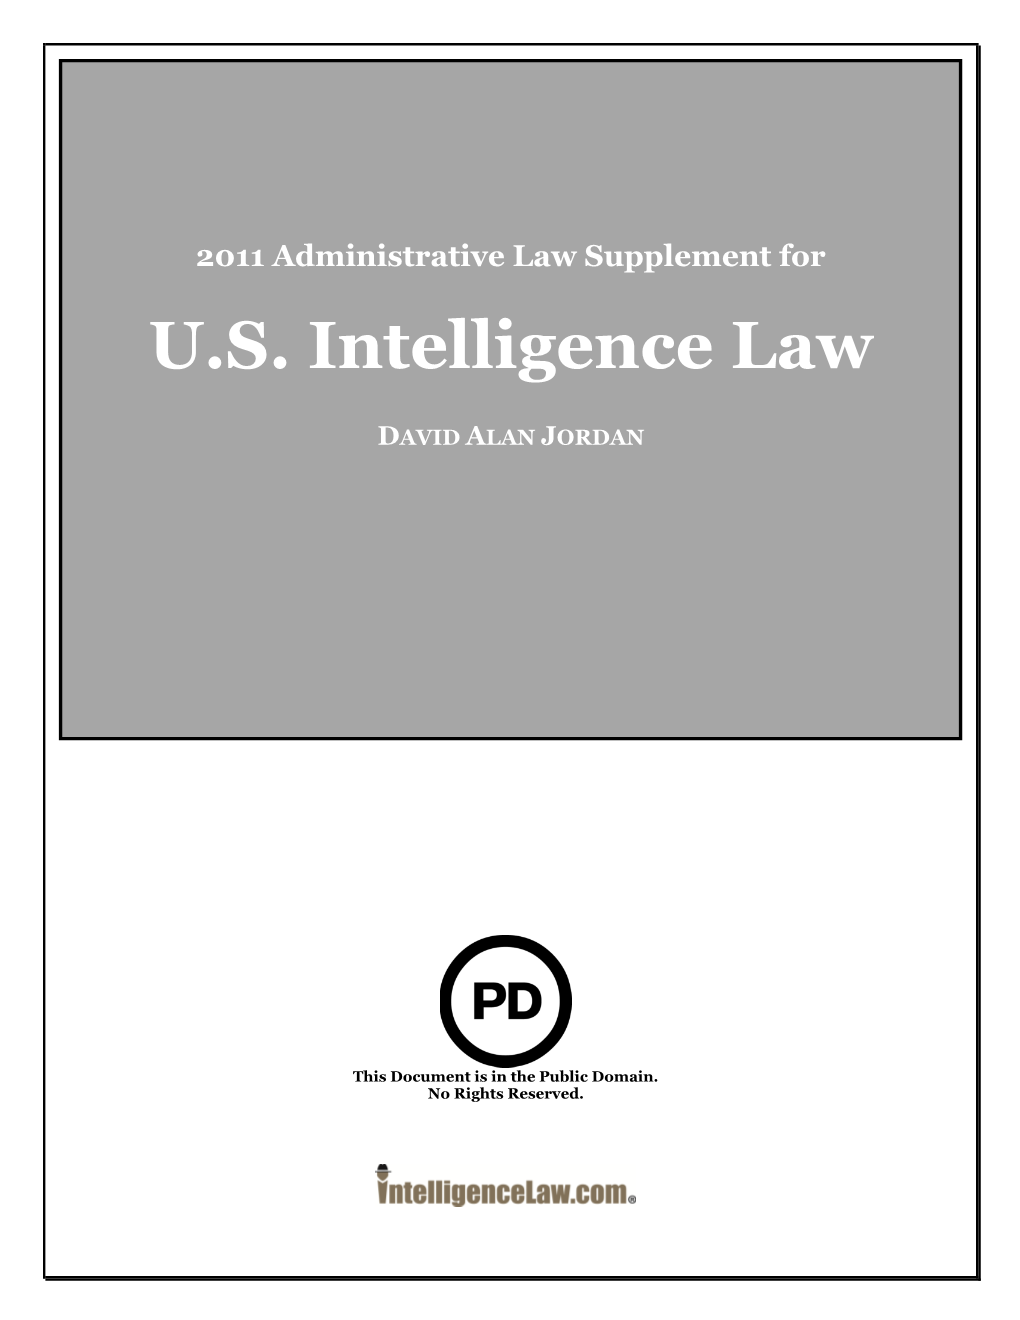 U.S. Intelligence Law